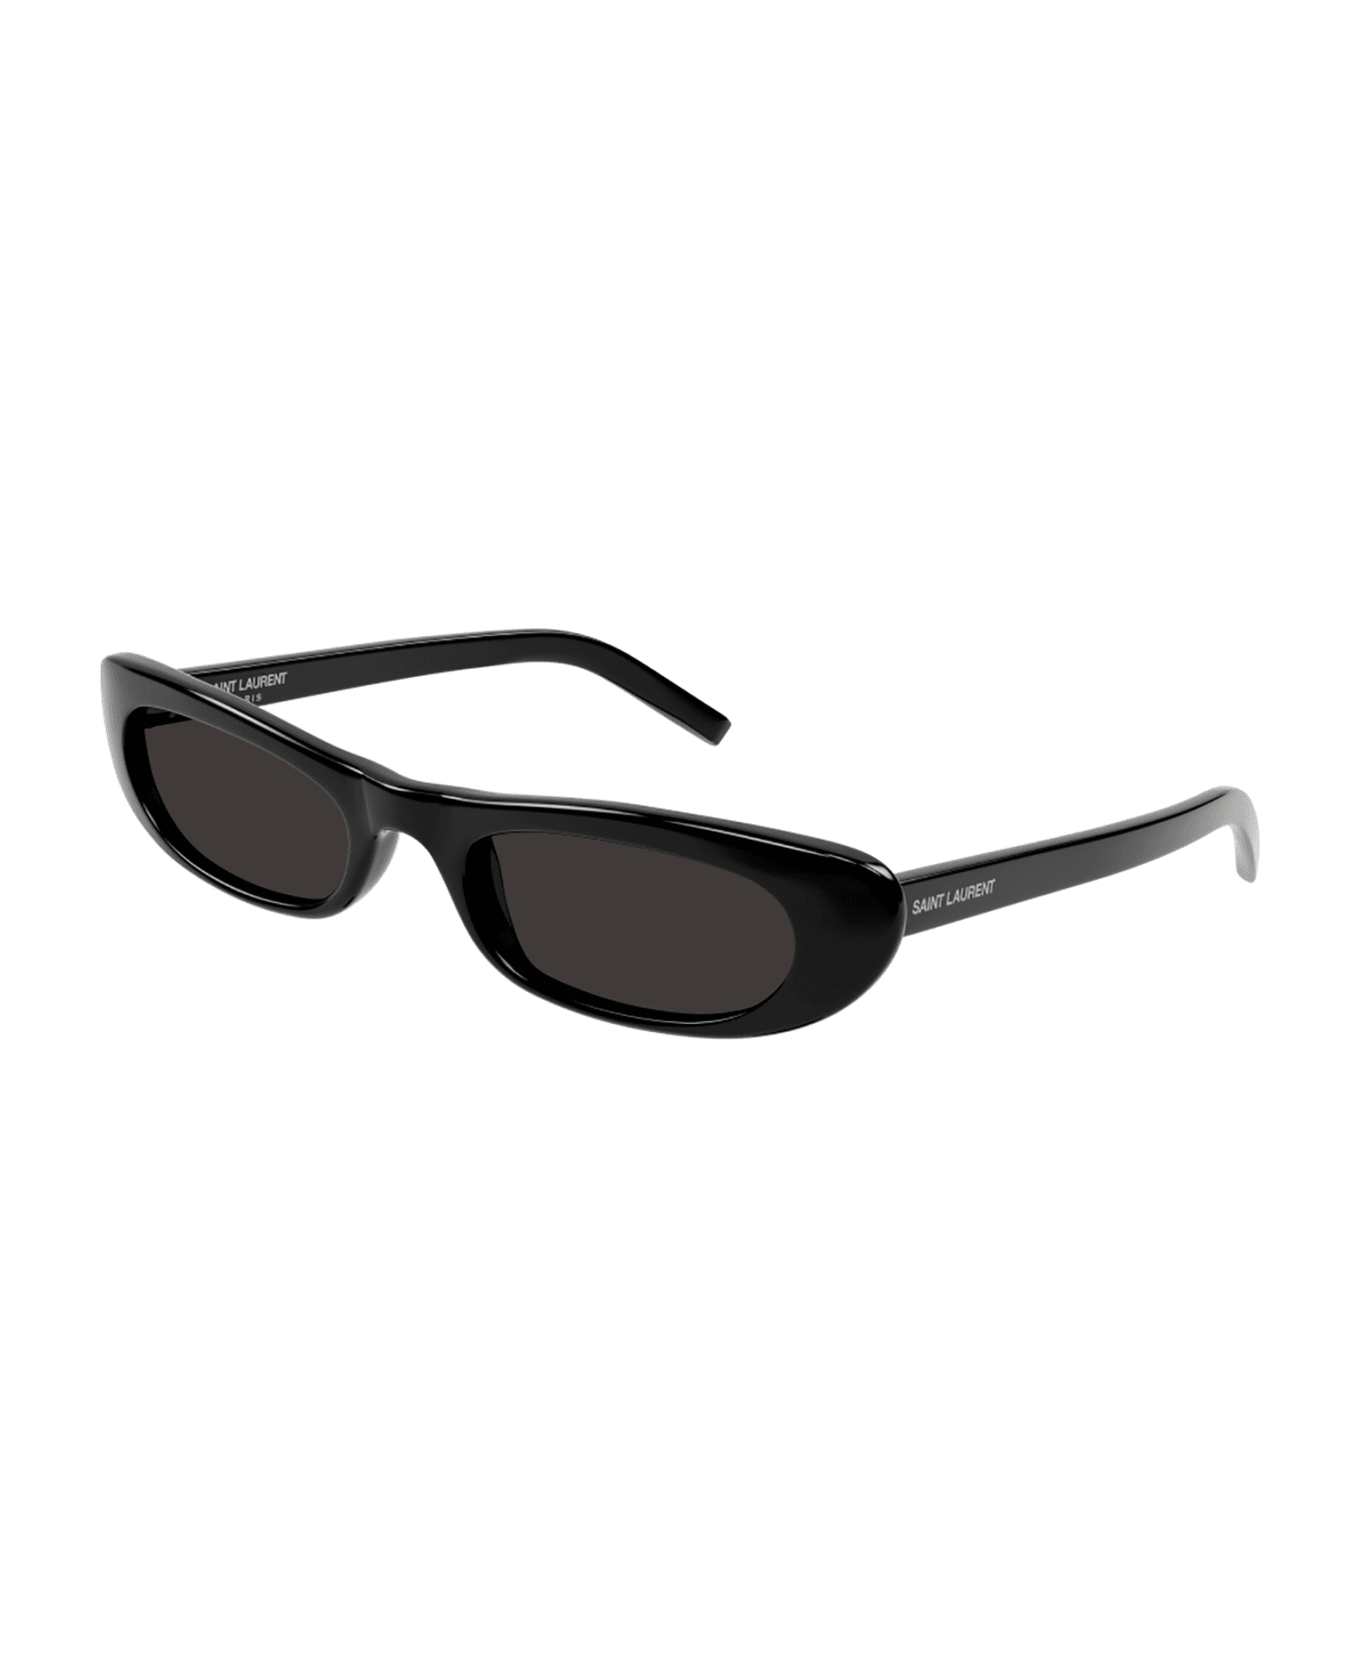 Saint Laurent Eyewear 1e5j4id0a - 001 black black black